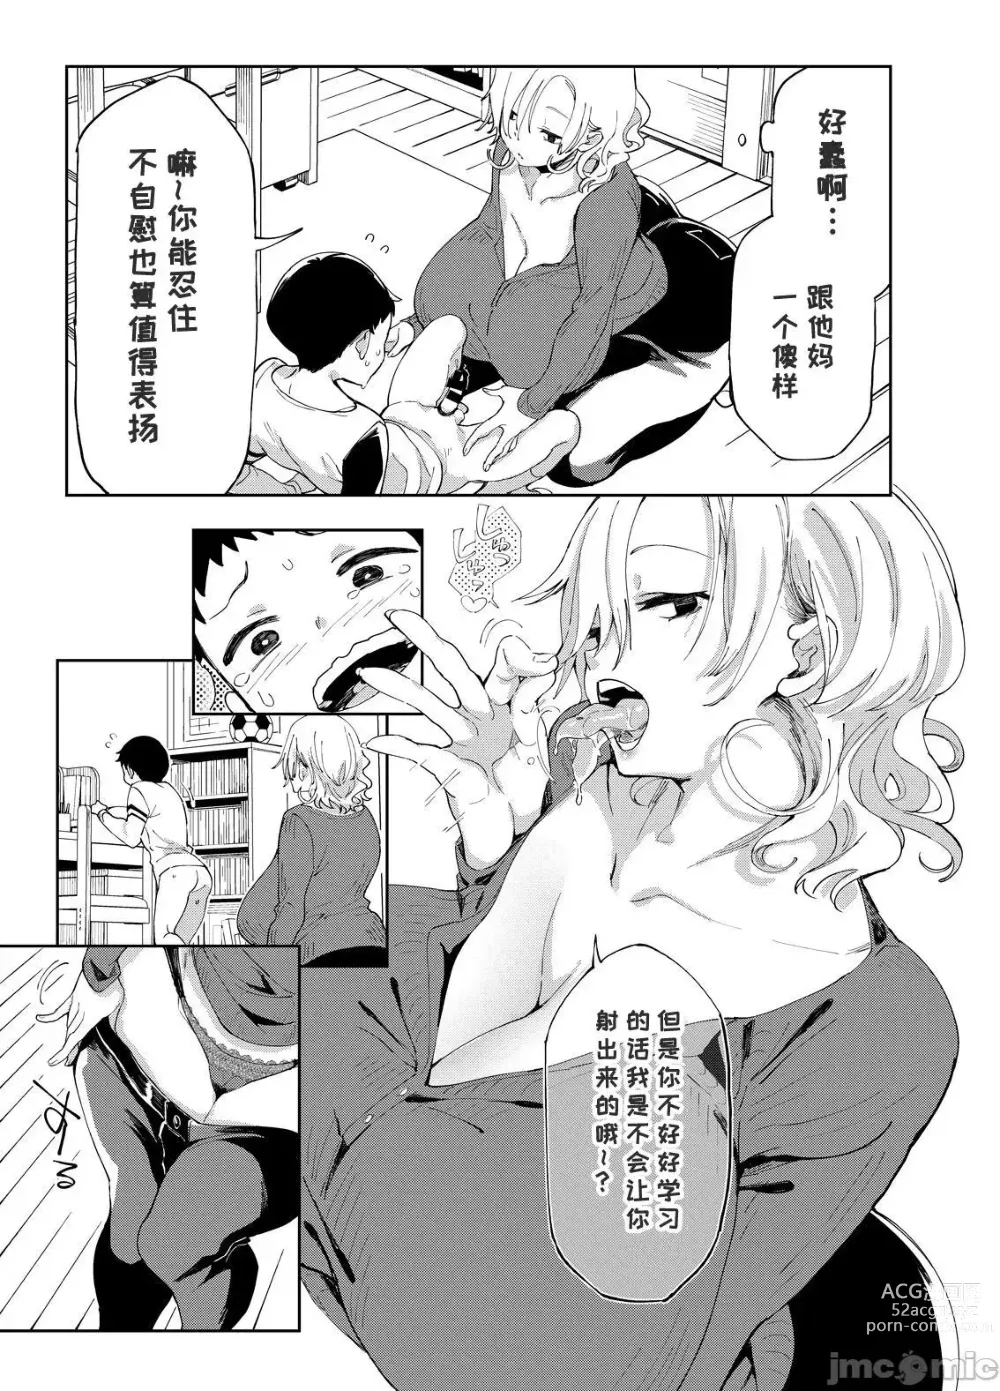 Page 6 of manga Chichi Showtime!